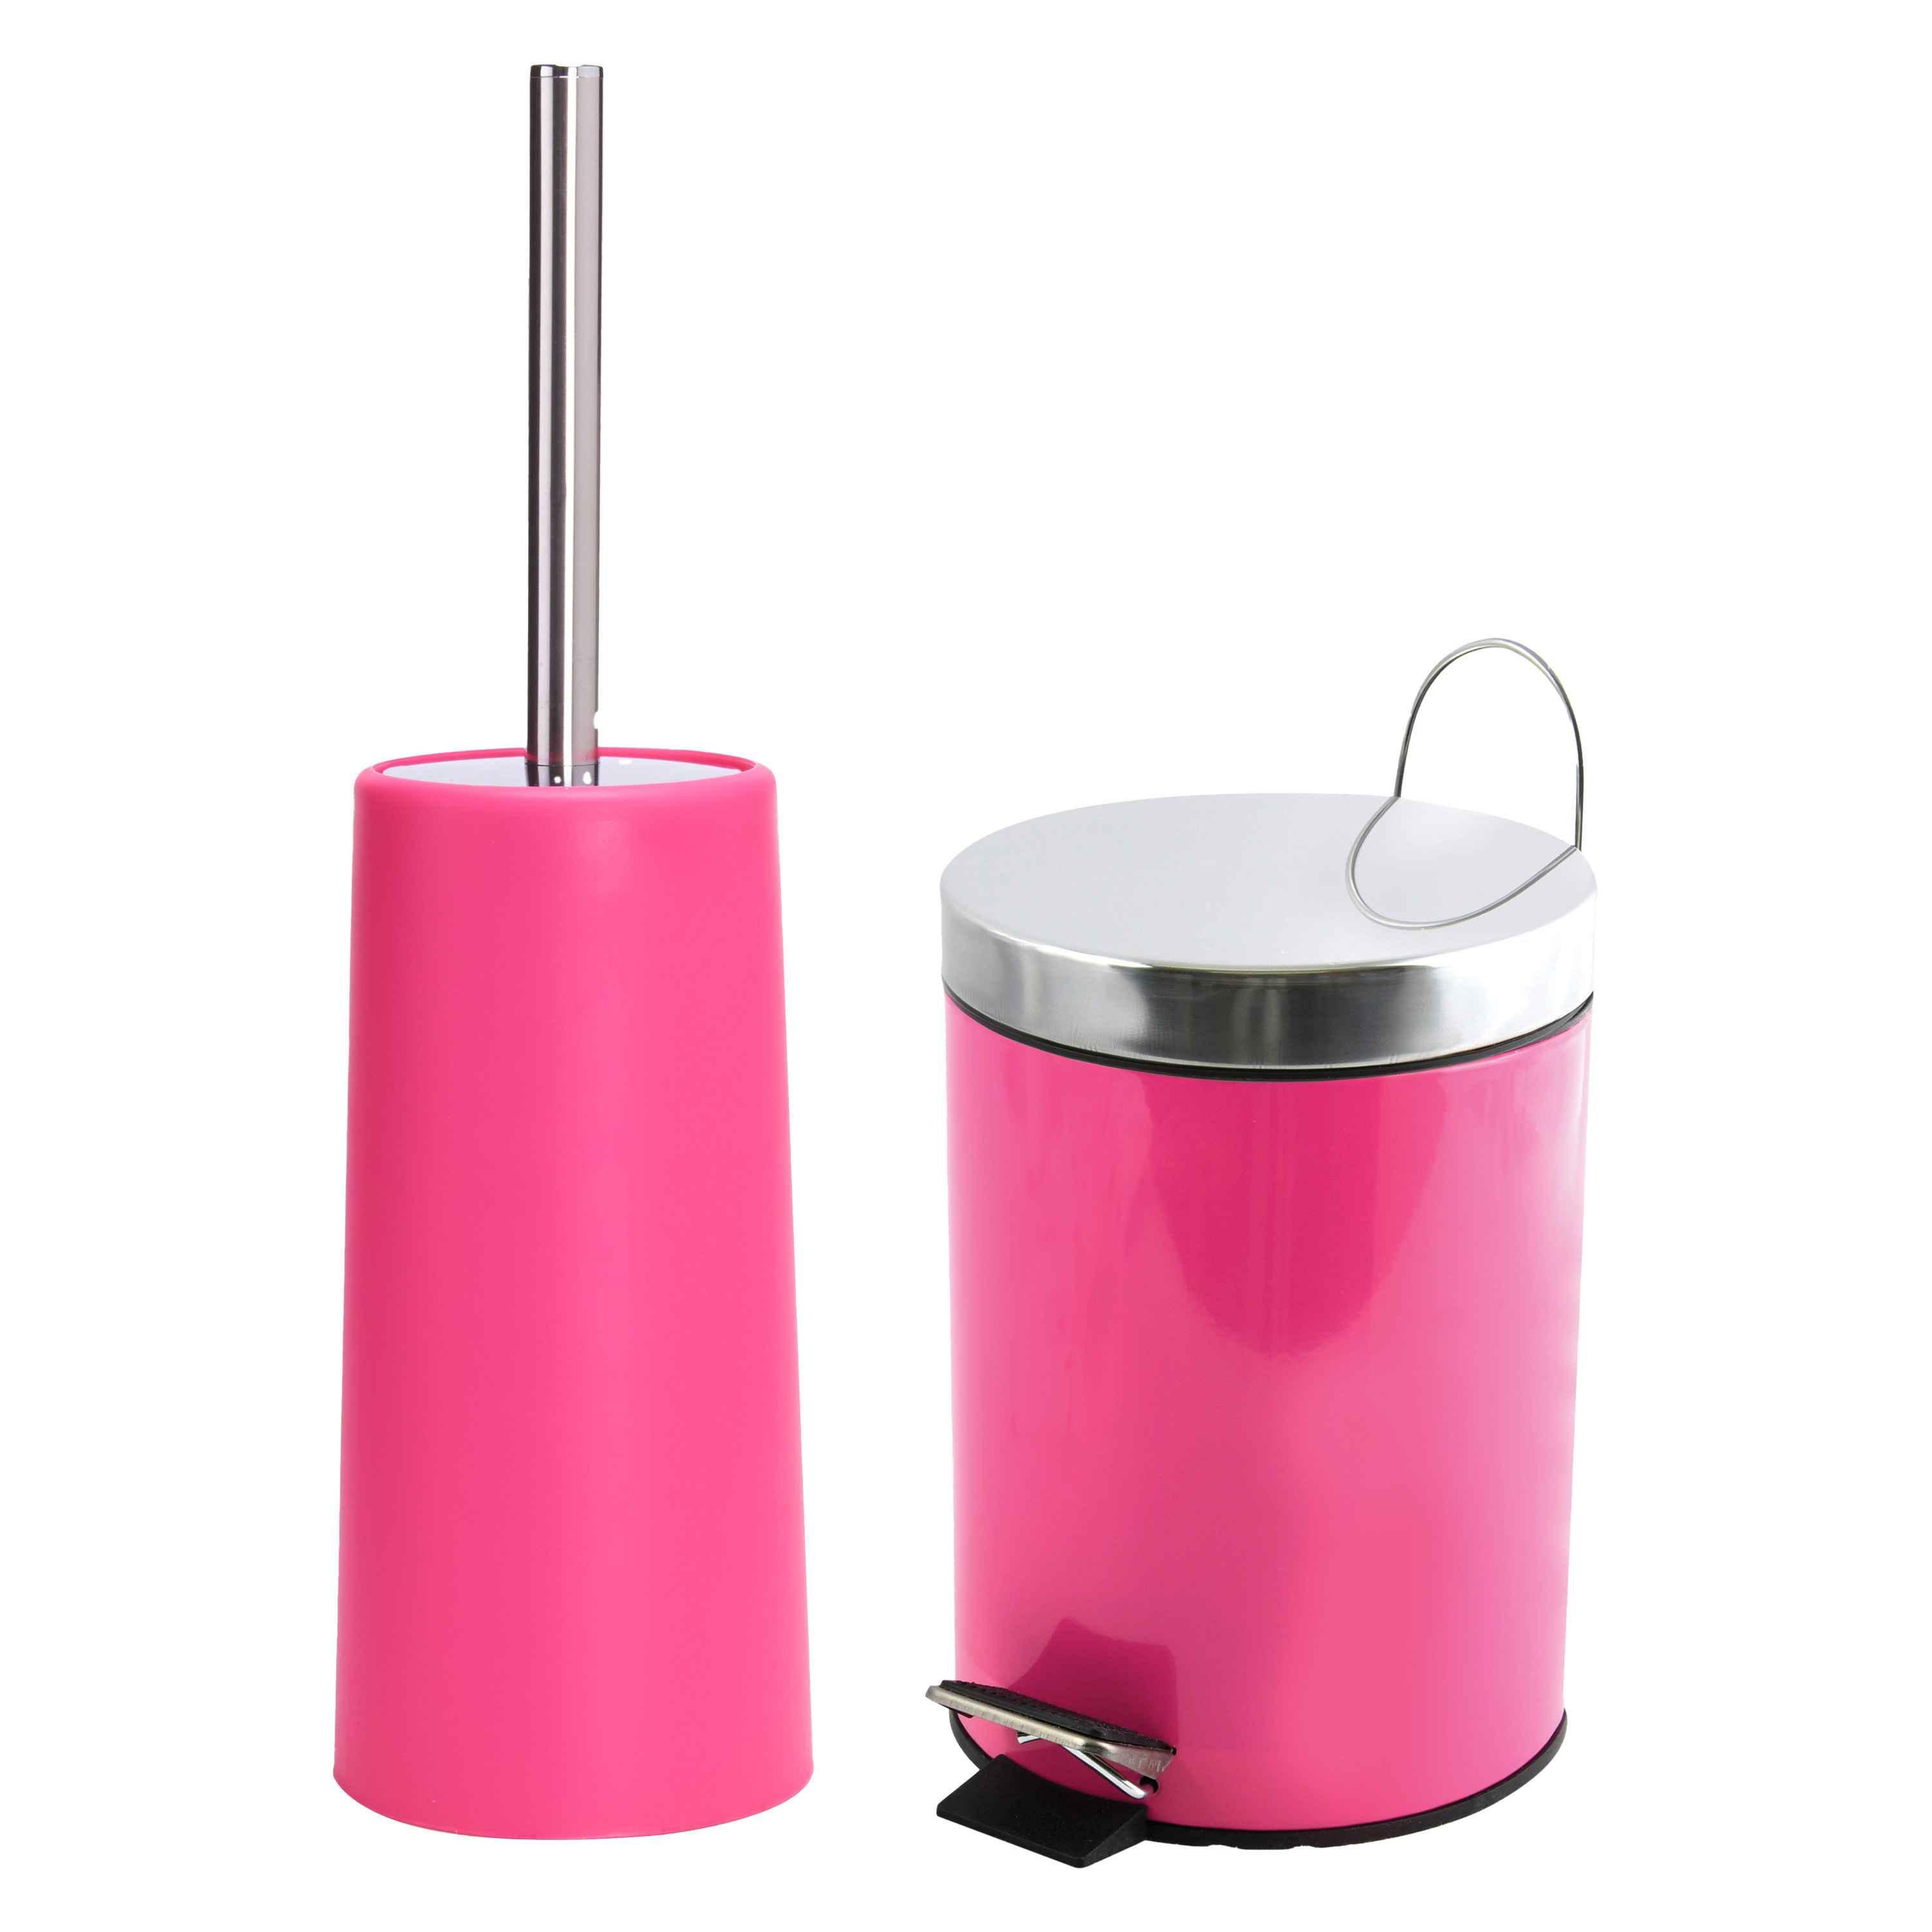 MSV Badkamer accessoires set fuchsia roze pedaalemmer-wc-borstel